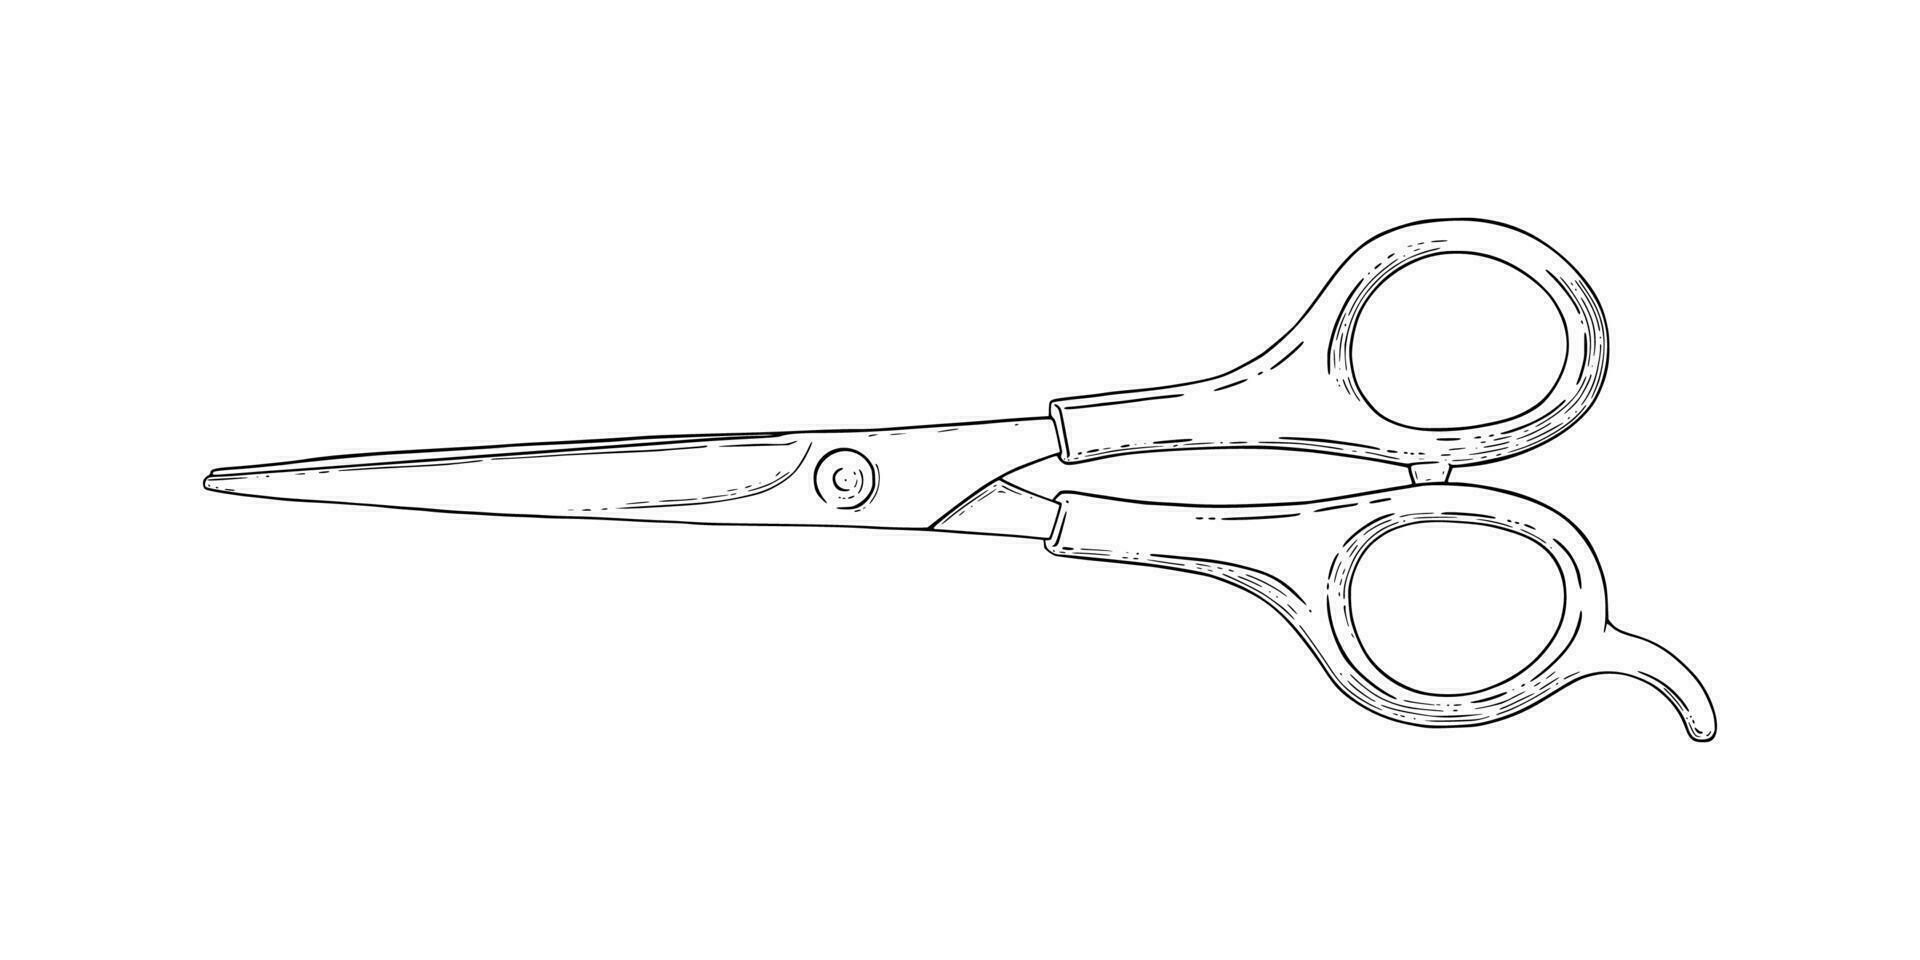 Scissors sketch. Hairdresser shears tool. Vector illustration